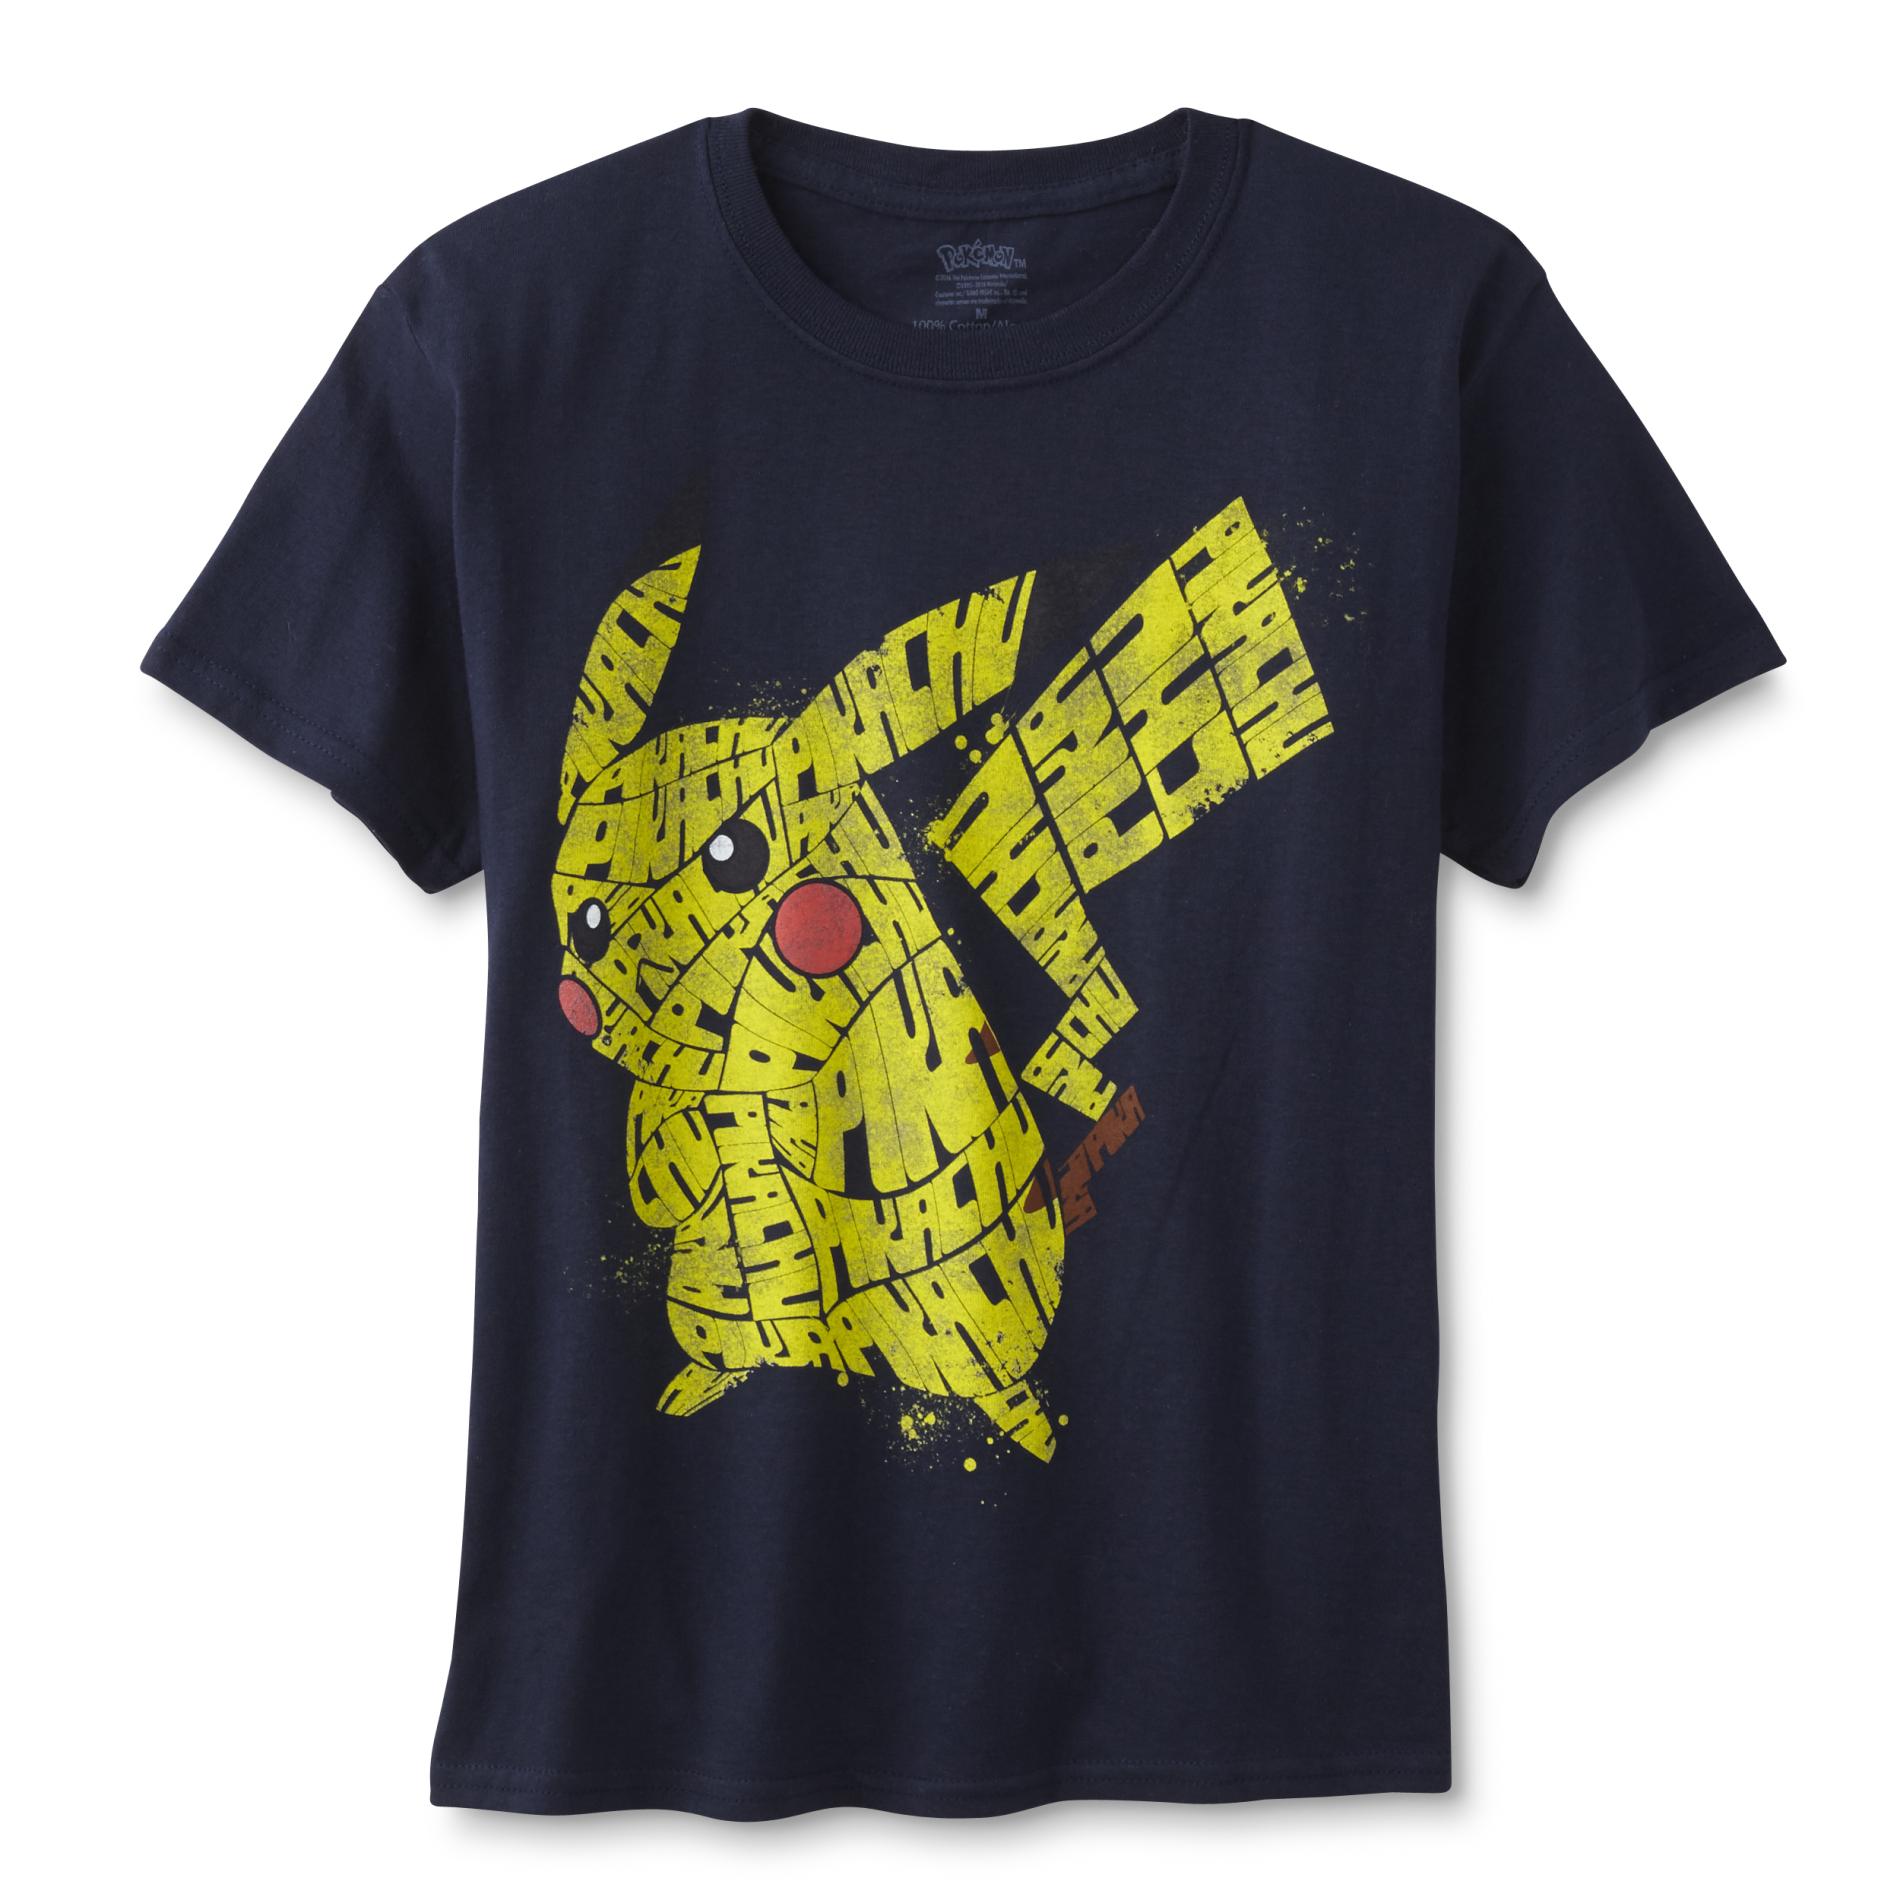 Nintendo Pokemon Boys' Graphic T-Shirt - Pikachu